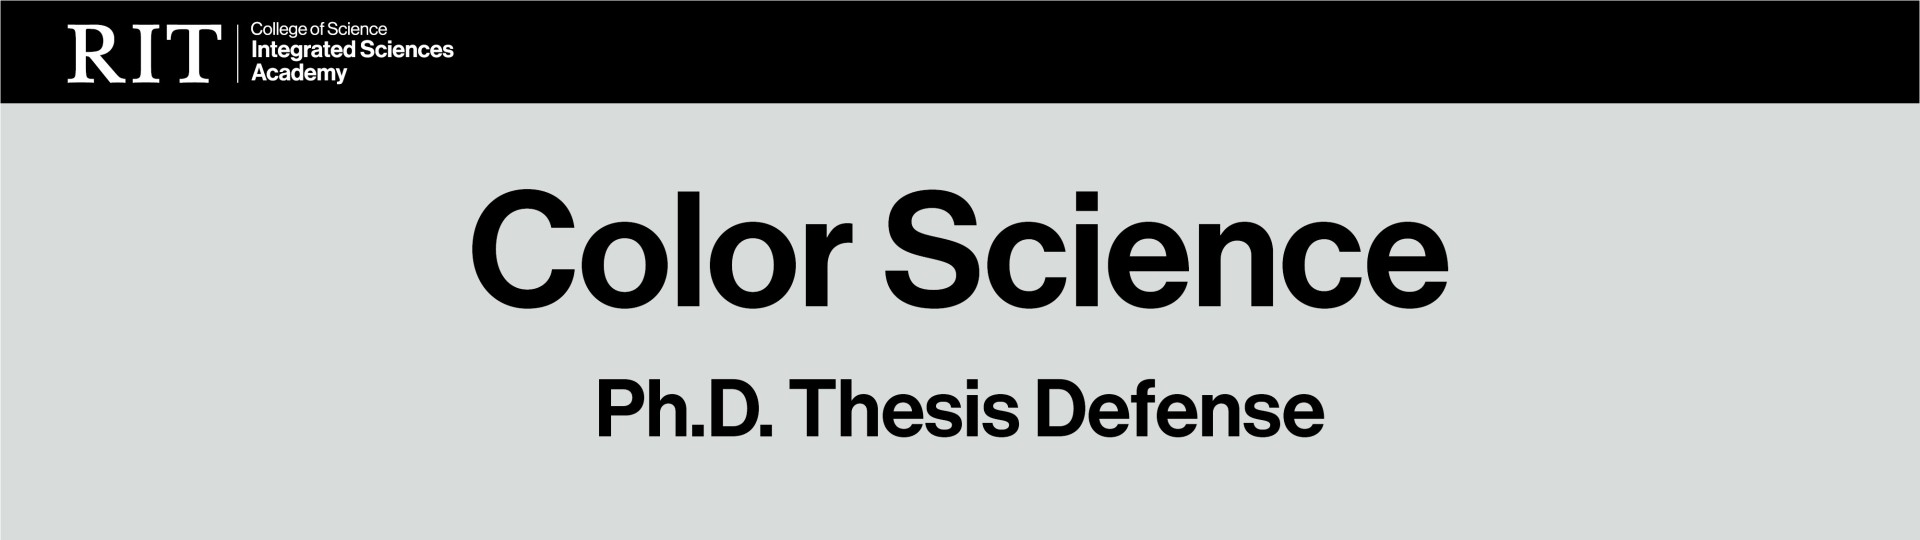 Color Science Ph.D Defense banner